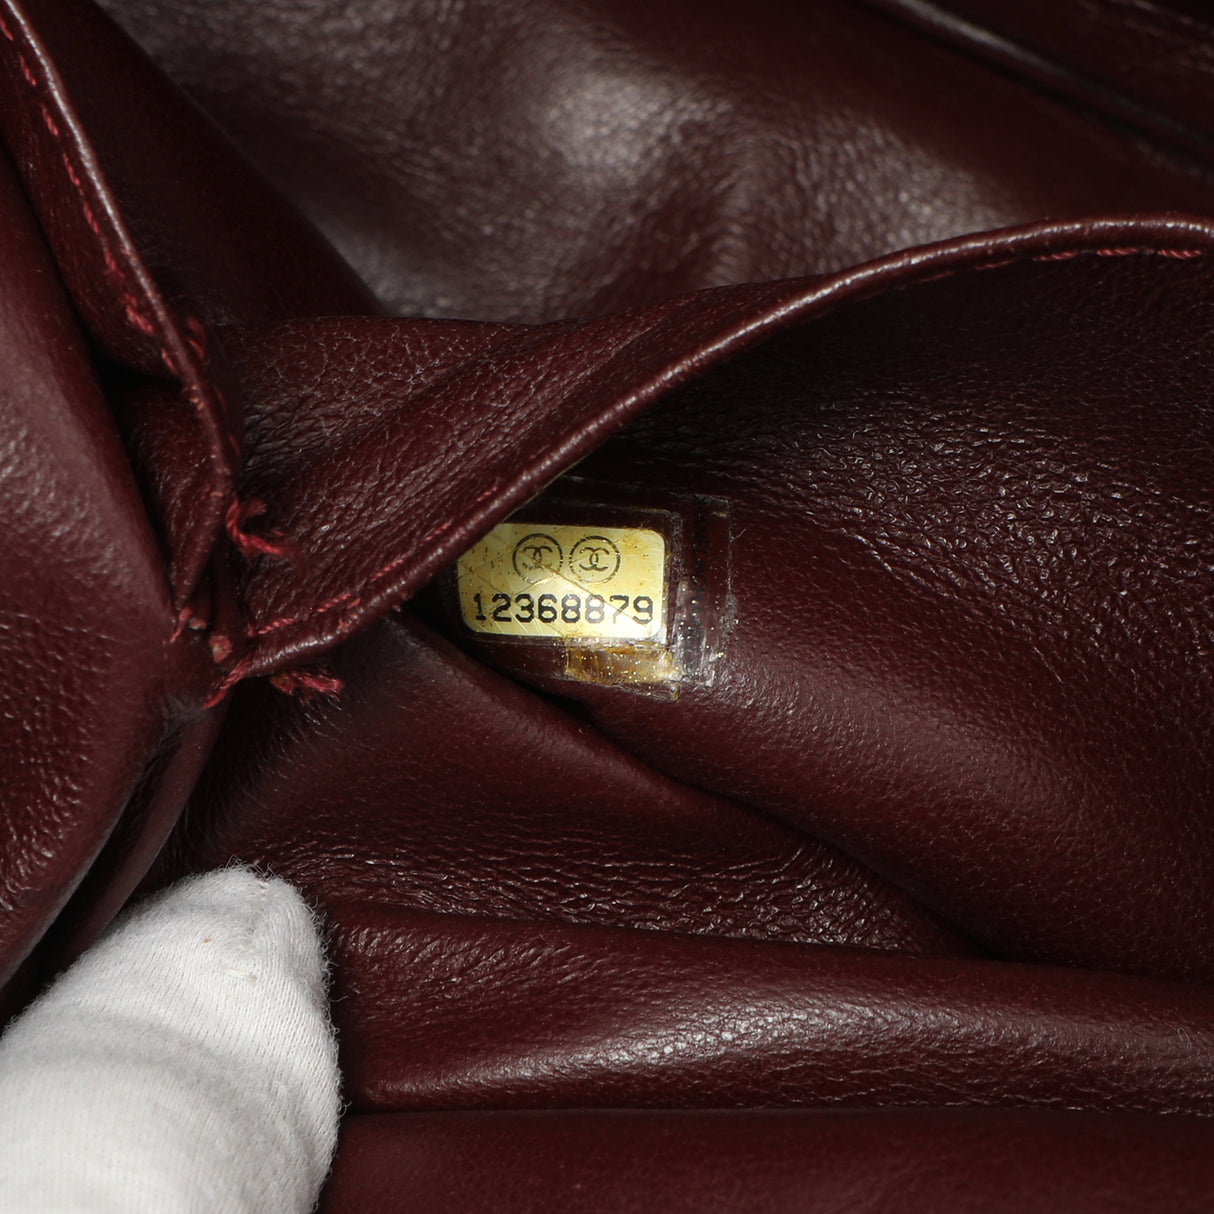 Chanel Black Quilted Aged Calfskin Medium Reissue Camera Case Bag